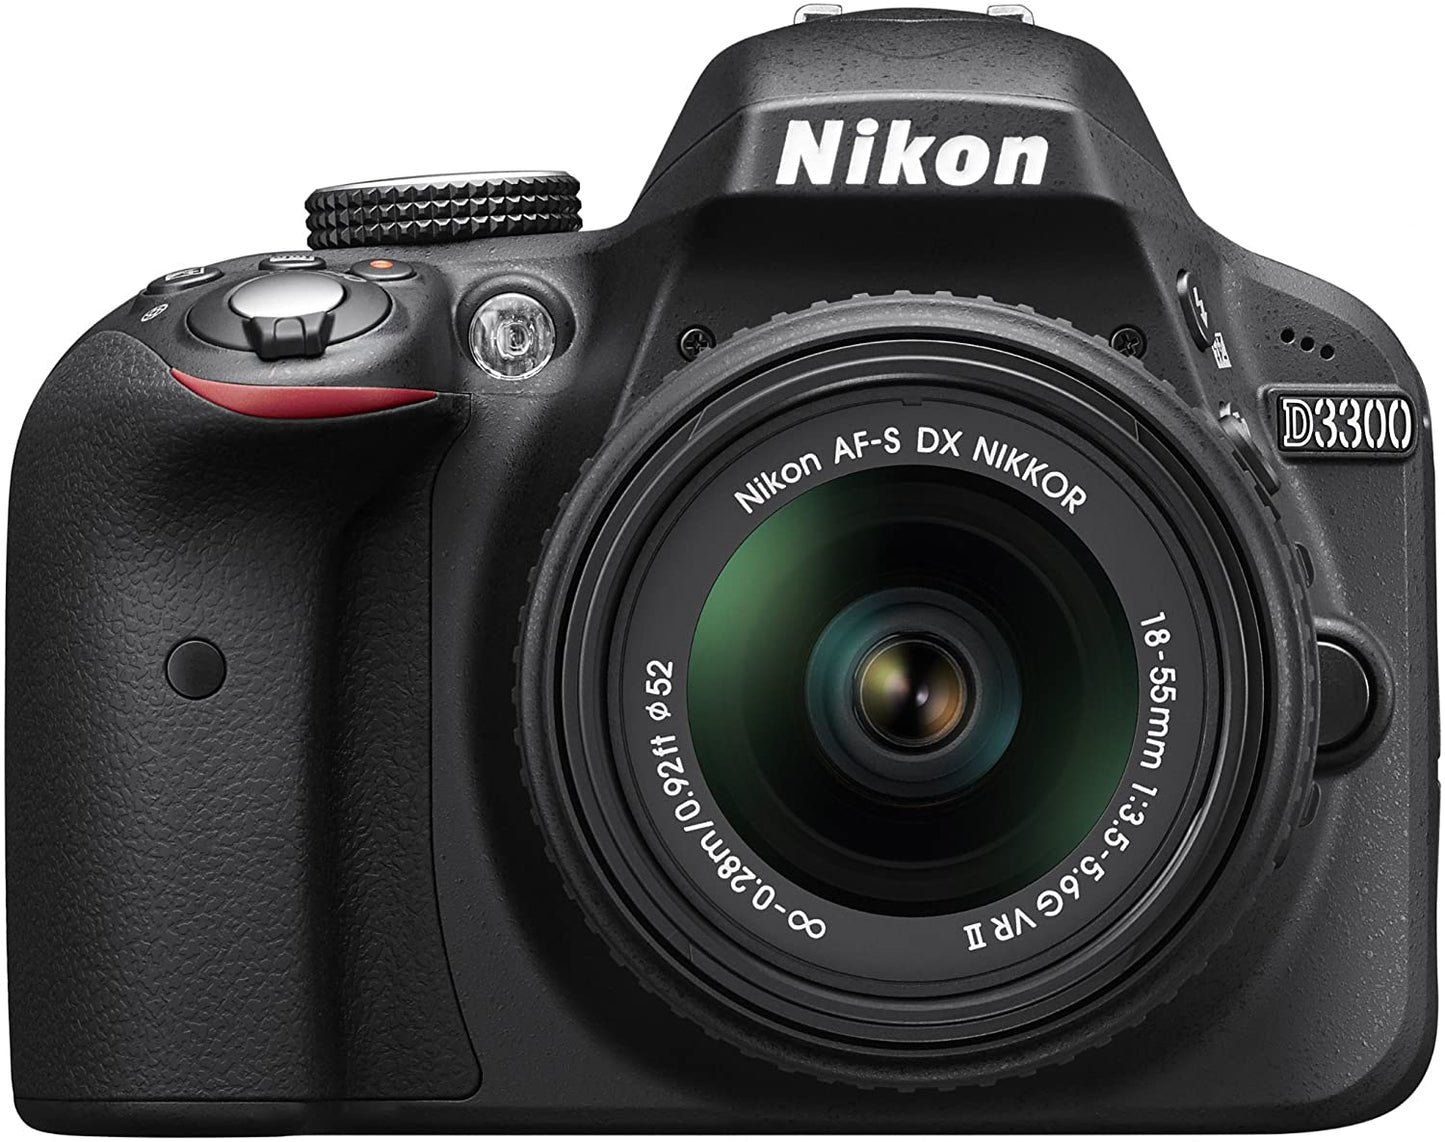 Nikon D3300 CAMERA 24.2 MP CMOS Digital SLR with Auto Focus-S DX Nikkor 18-55mm f/3.5-5.6G VR II Zoom Lens (Black) (used)